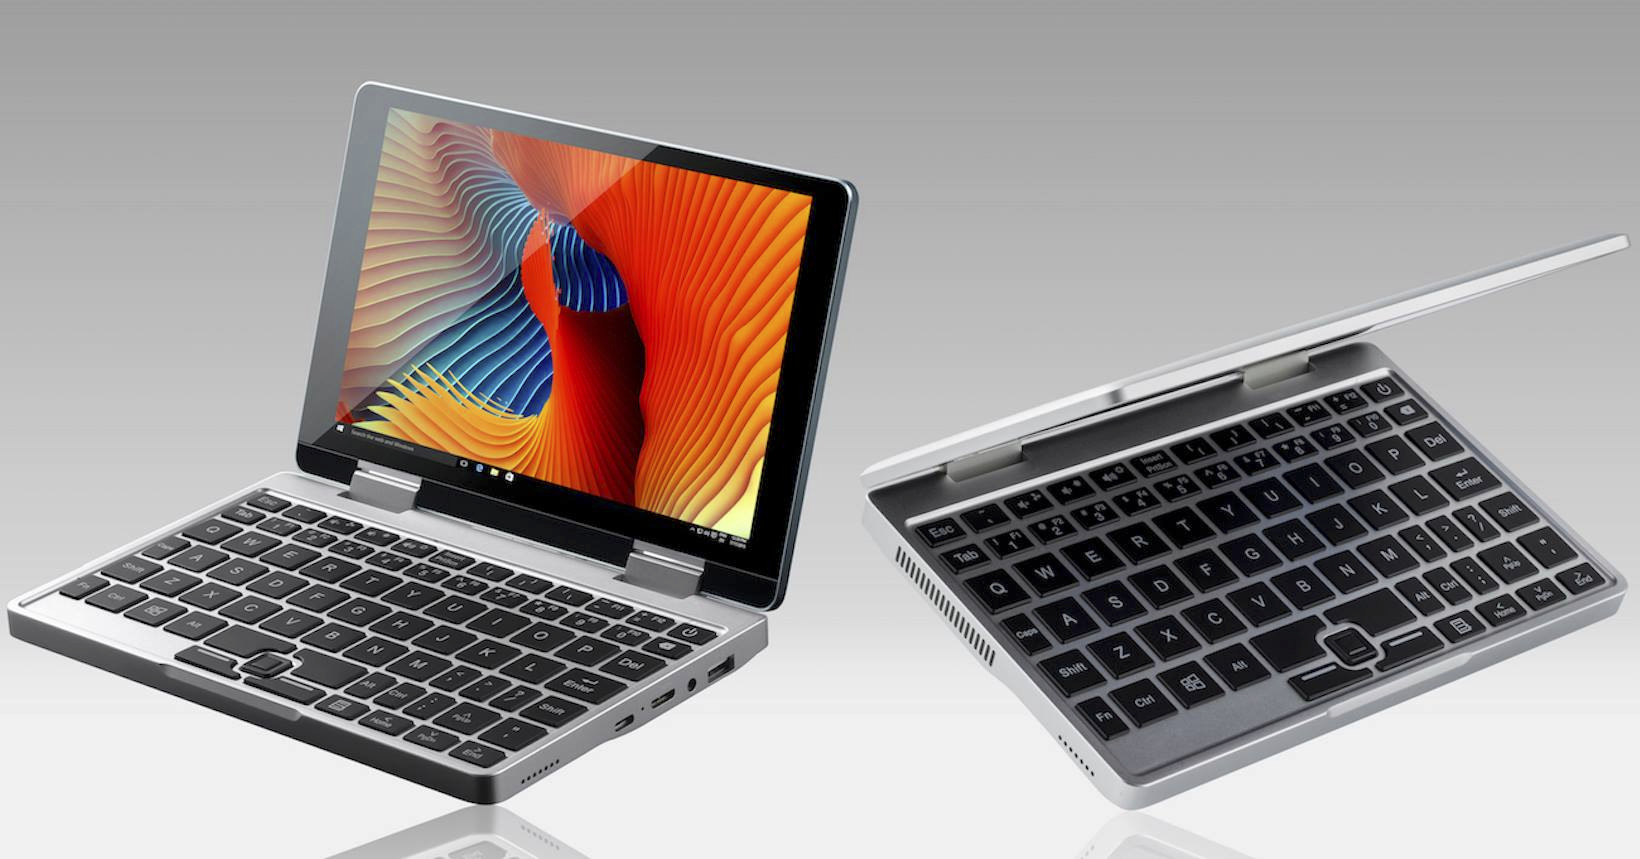 TopJoy Falcon Mini 8″ Laptop Features an Intel Pentium N5000 Processor